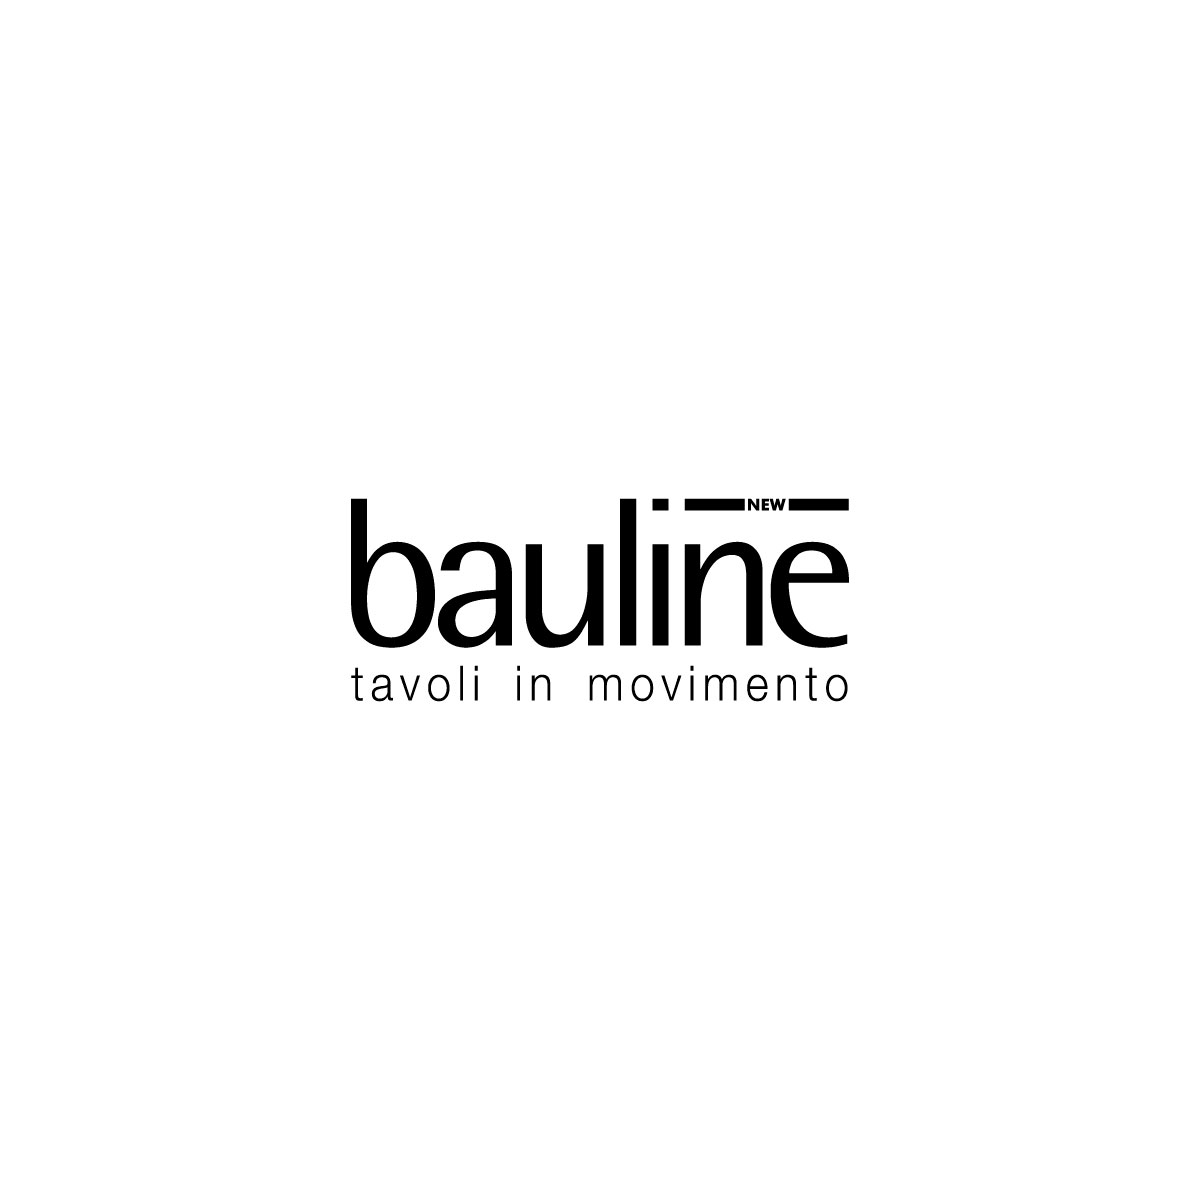 Bauline